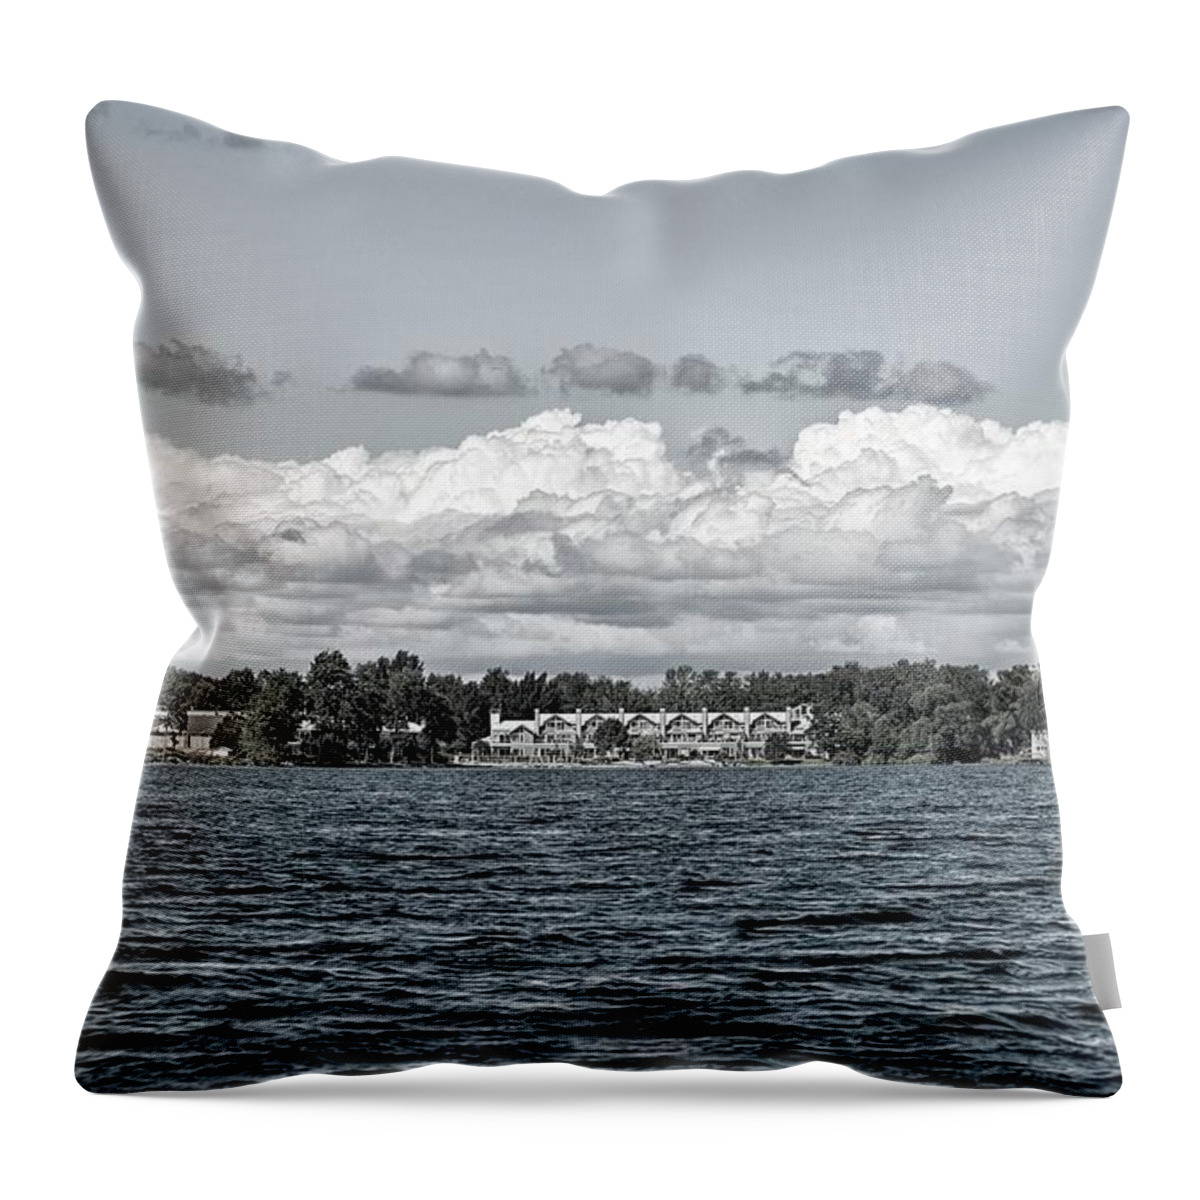 Invermara Throw Pillow featuring the digital art Invermara Bay by JGracey Stinson